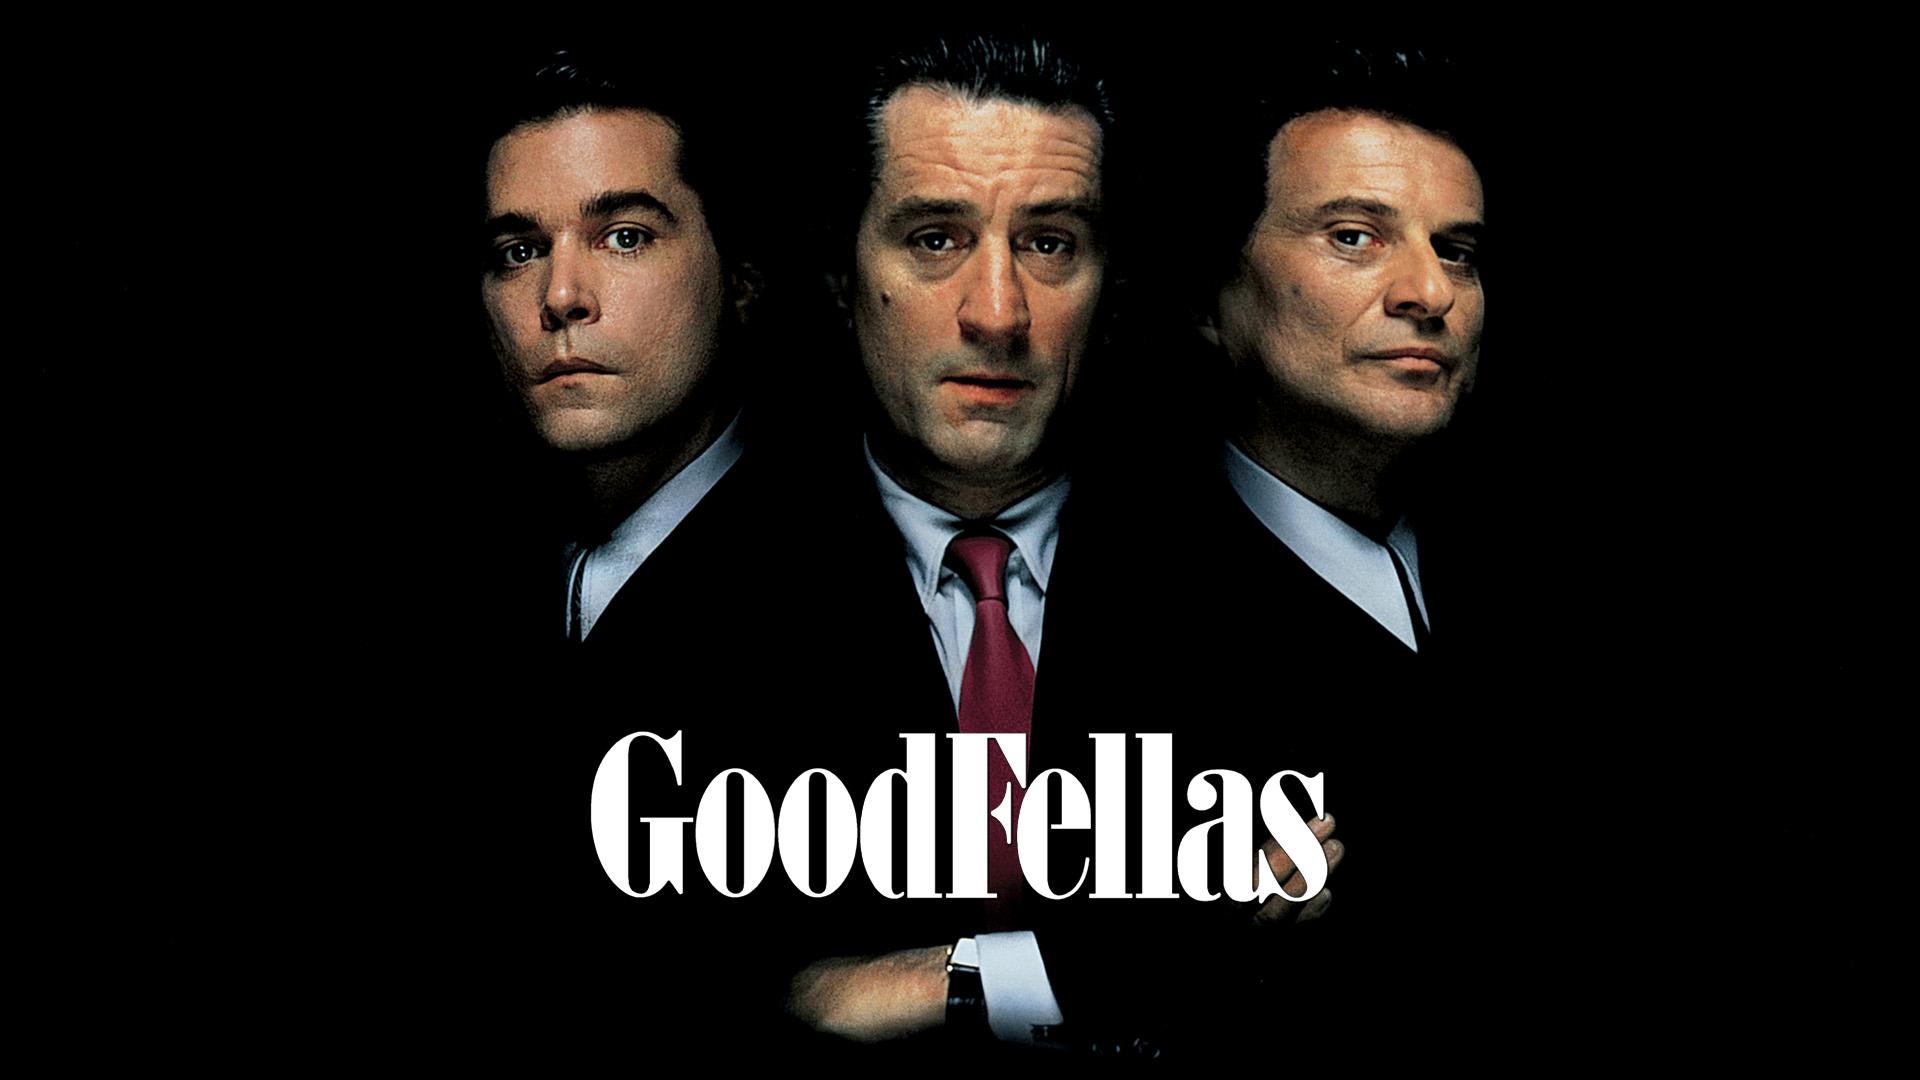 Watch Goodfellas Online | Stream Full Movies